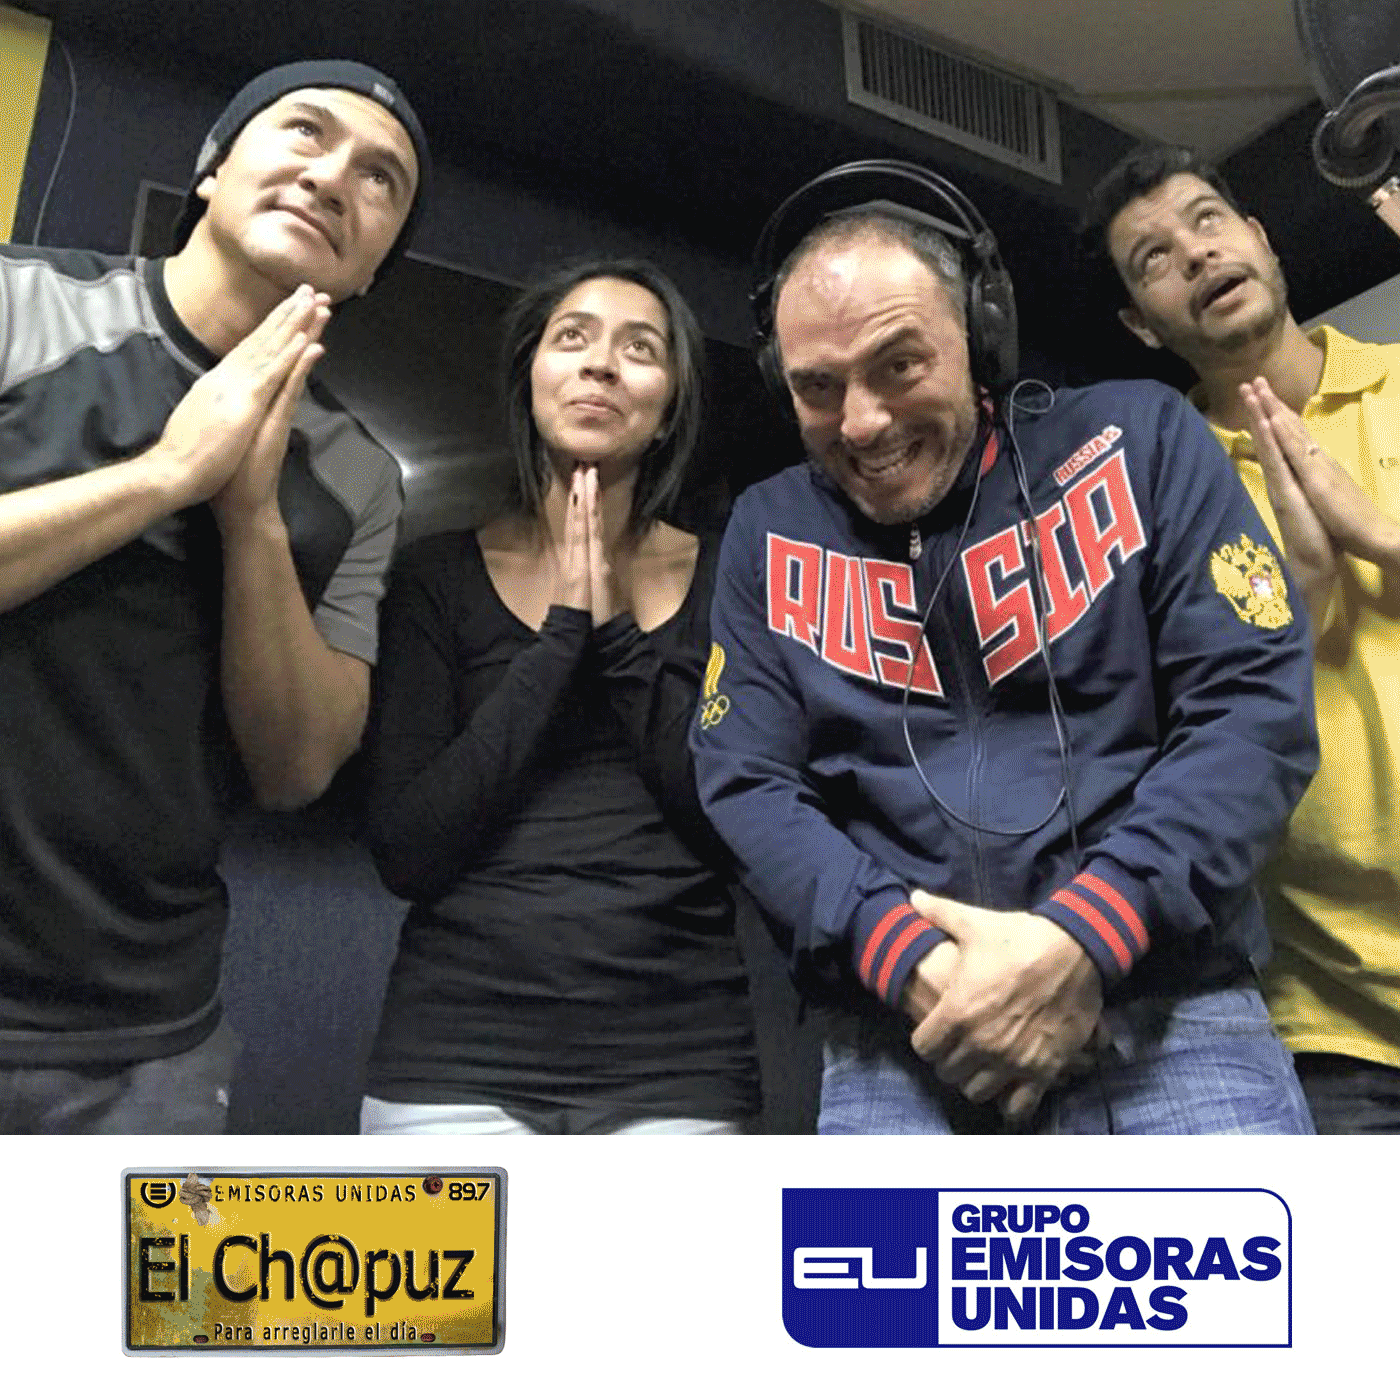 EC031 - El Chapuz - Emisoras unidas - #15MinutosAlcanzanPara